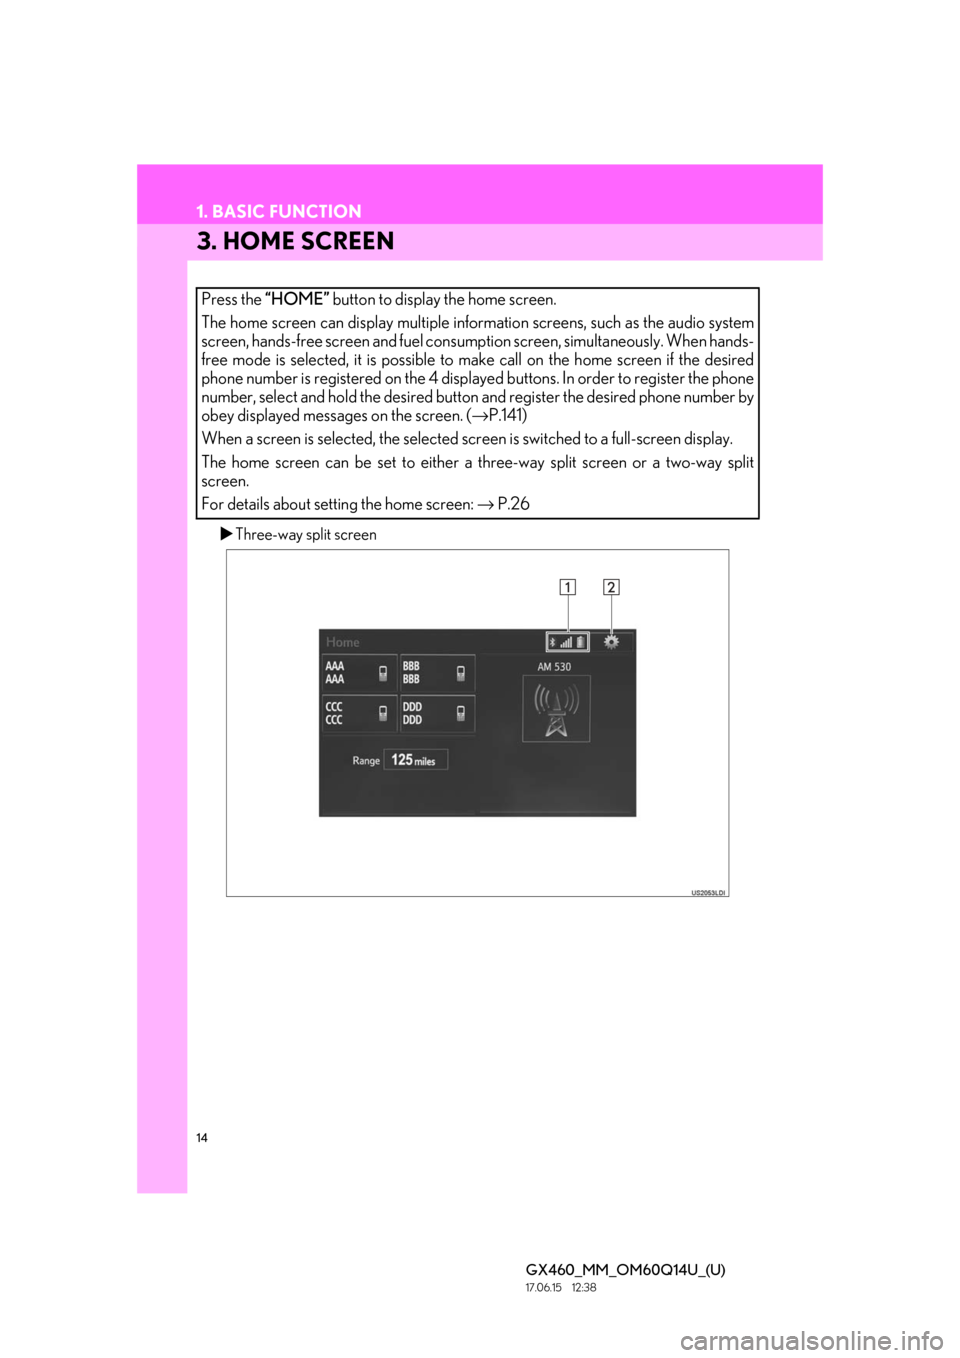 Lexus GX460 2018  Owners Manual / LEXUS 2018 GX460 MULTIMEDIA SYSTEM OWNERS MANUAL (OM60Q14U) 14
1. BASIC FUNCTION
GX460_MM_OM60Q14U_(U)17.06.15     12:38
3. HOME SCREEN
Three-way split screen
Press the “HOME”  button to display the home screen.
The home screen can display multiple info